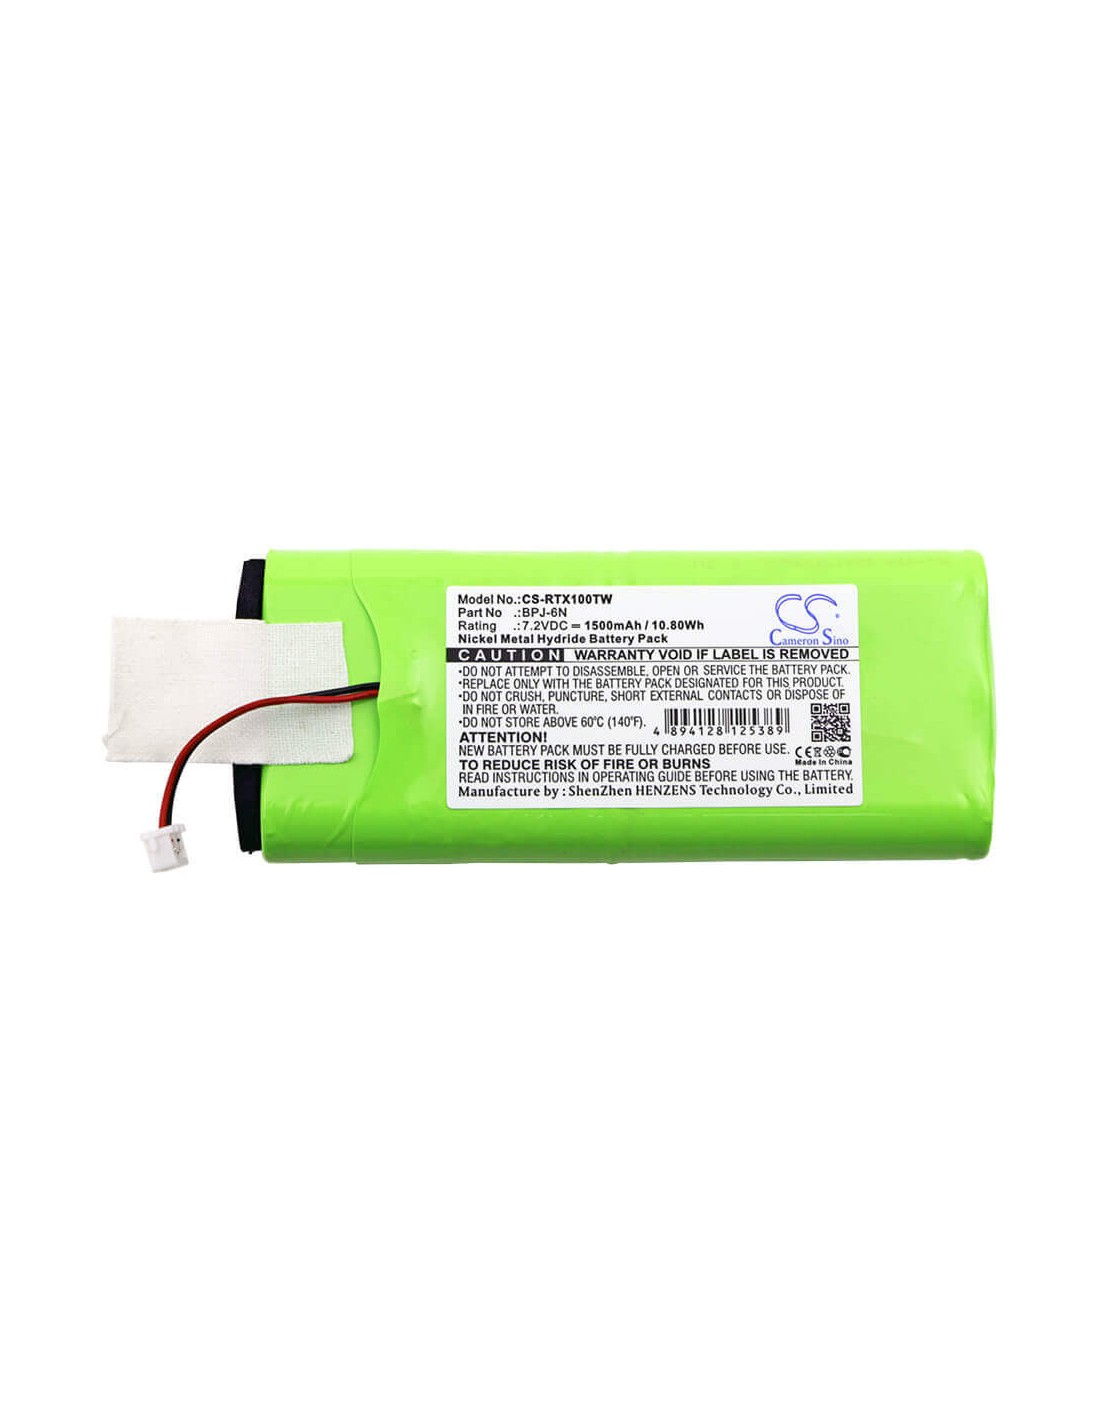 Battery for Ritron, Jmx-100, Jmx-150, Jmx-450, Jobcom 7.2V, 1500mAh - 10.80Wh